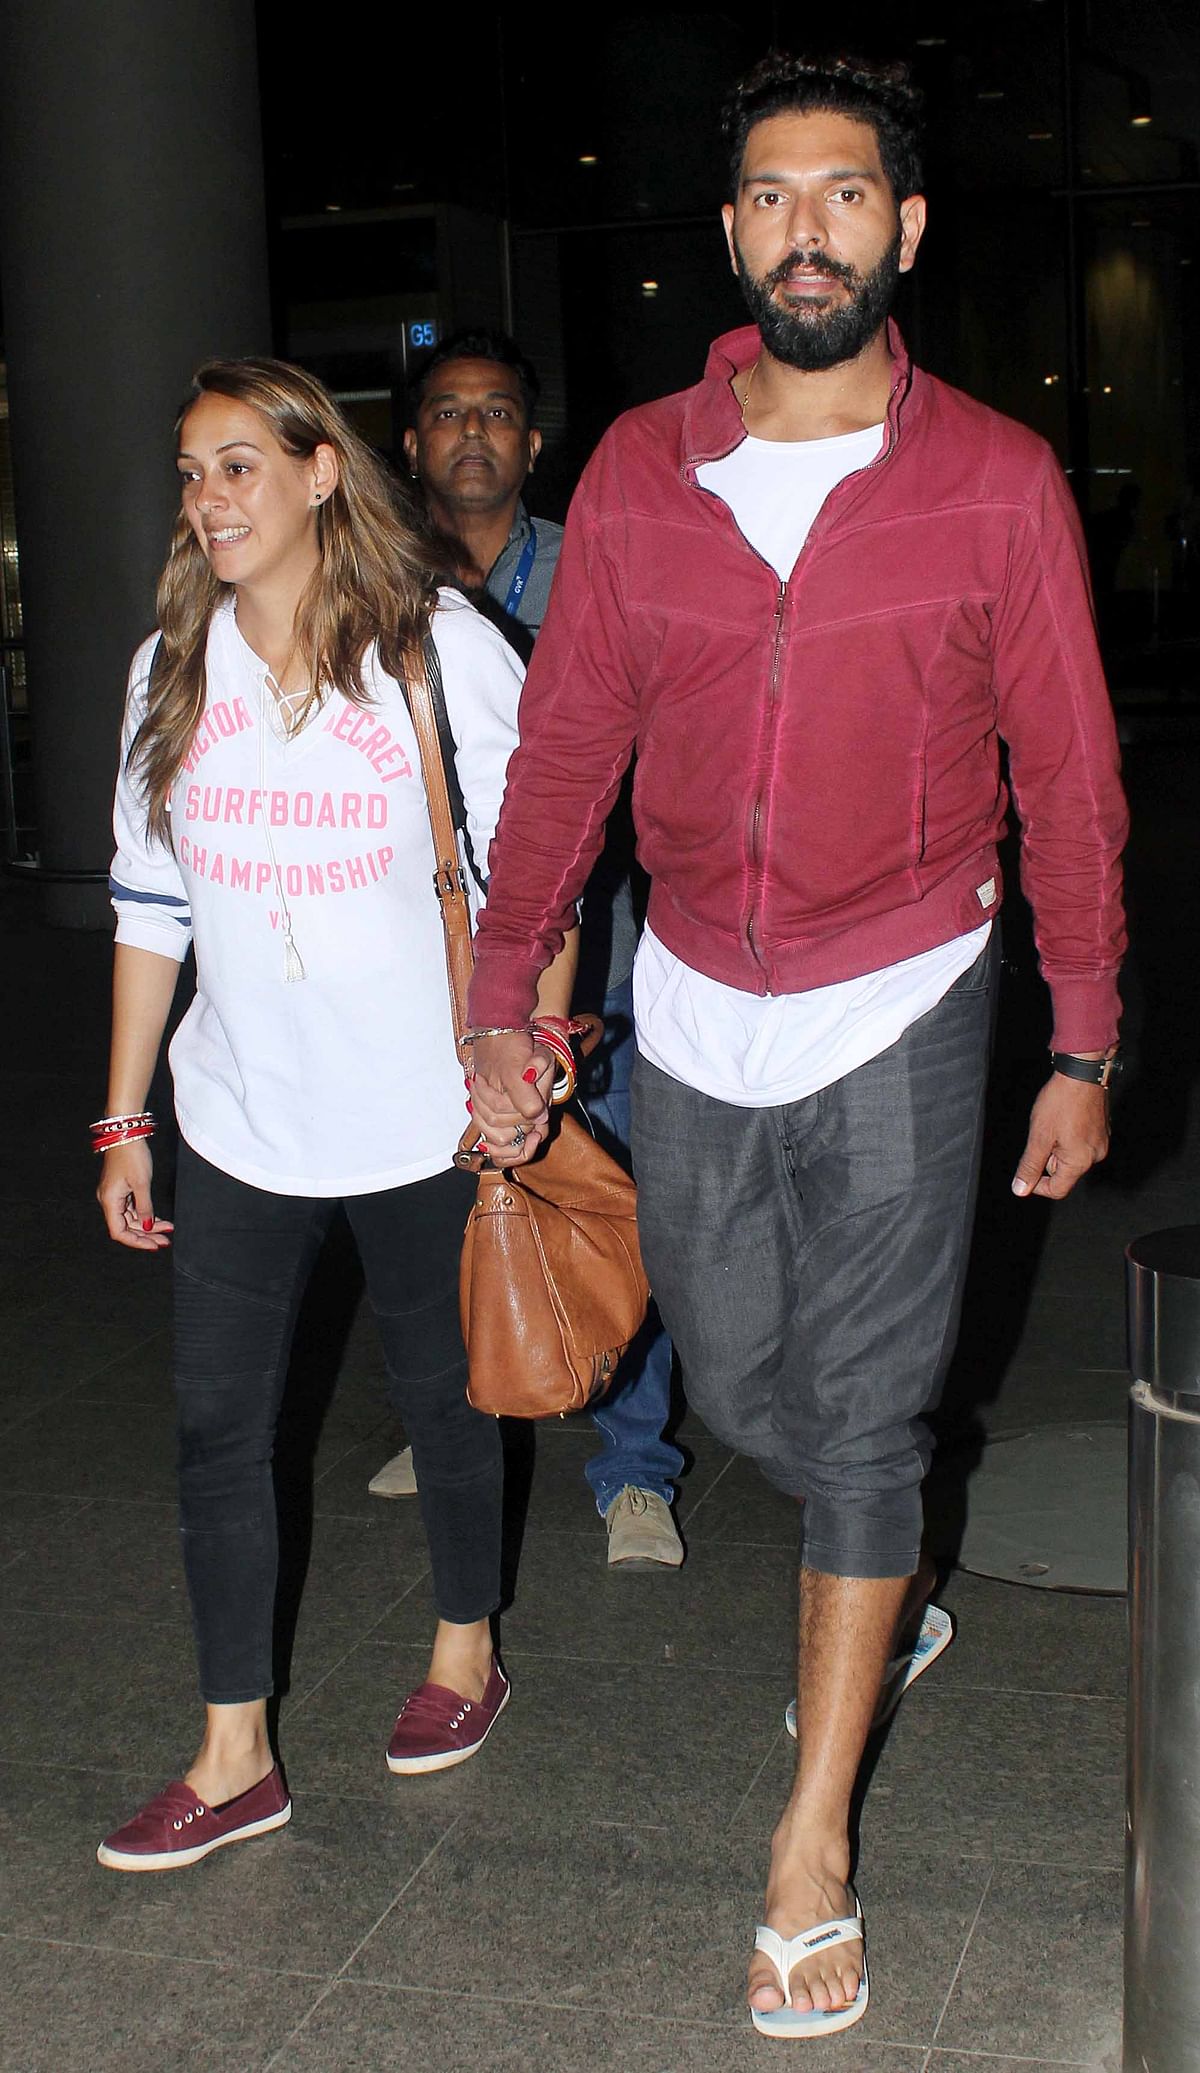 Pictures of Yuvraj Singh and Hazel Keech returning from their ‘secret’ honeymoon.